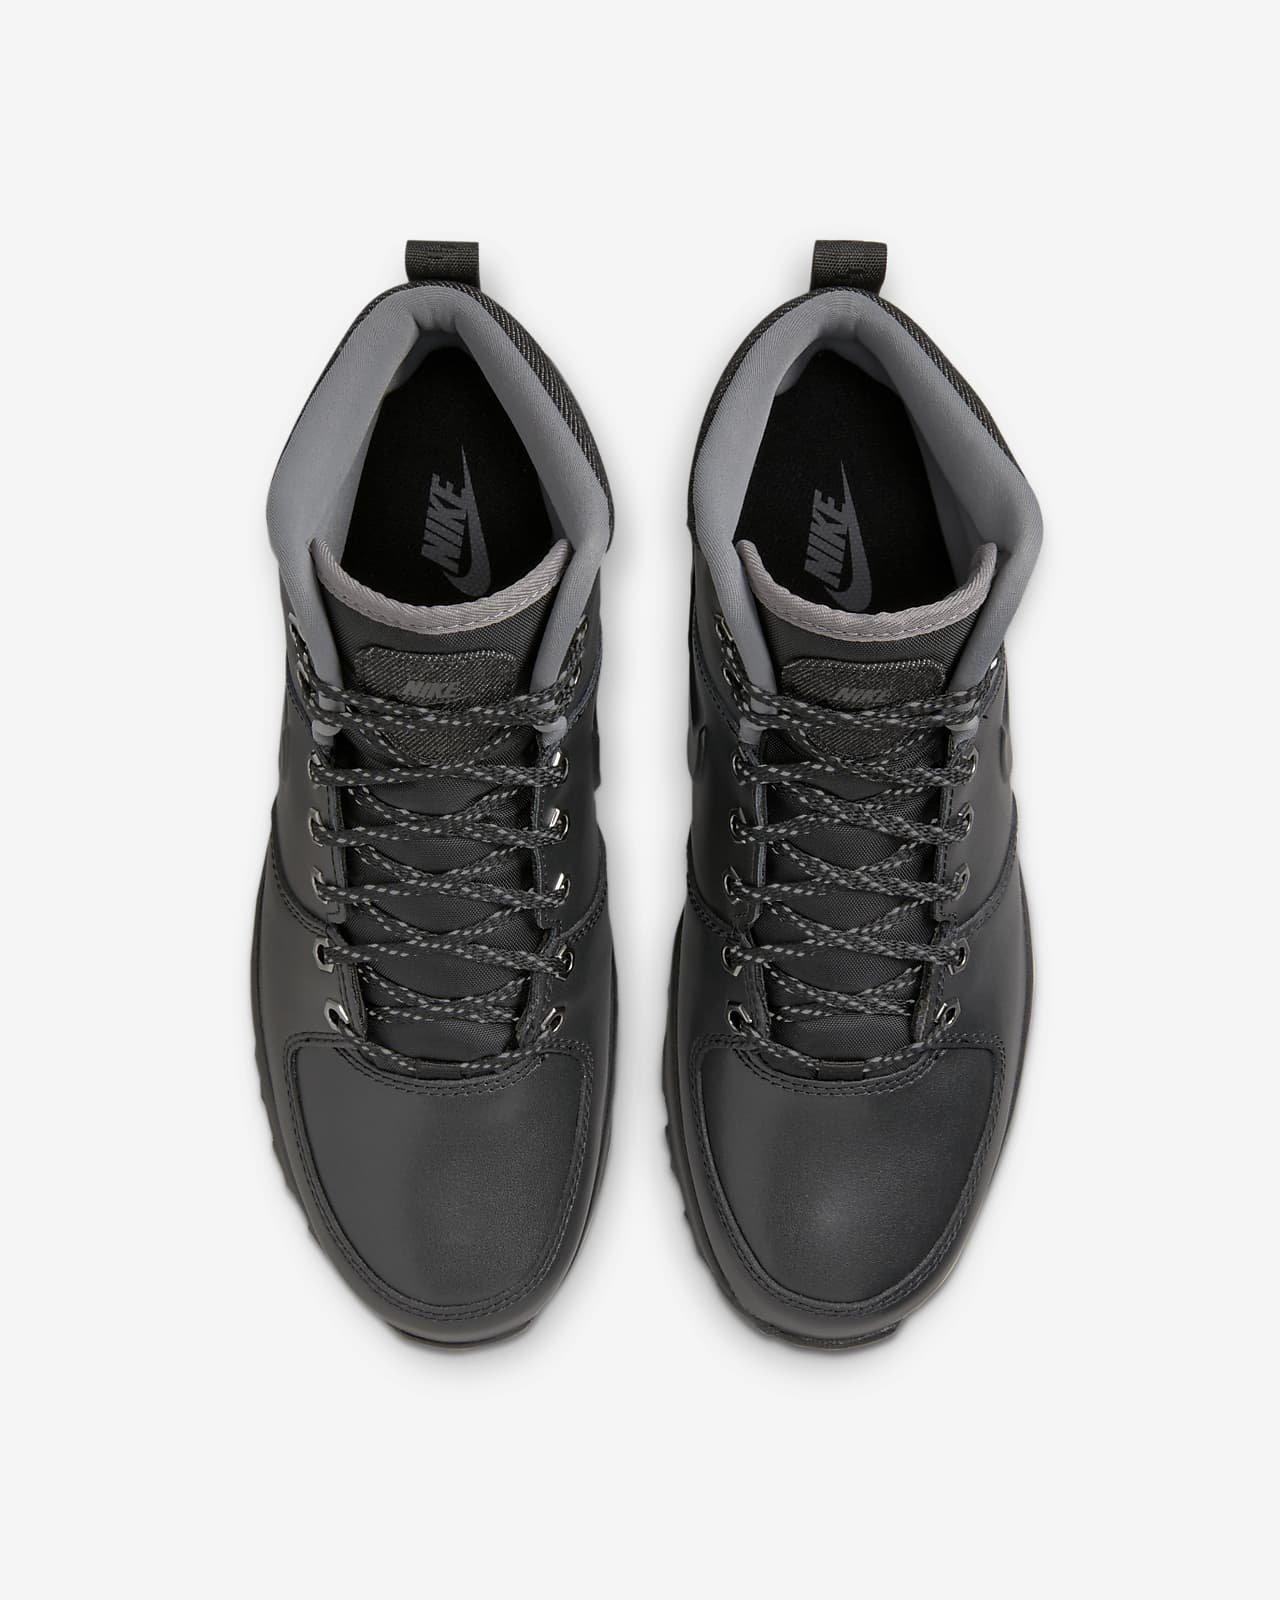 Boots. SE Nike Manoa Leather Men\'s